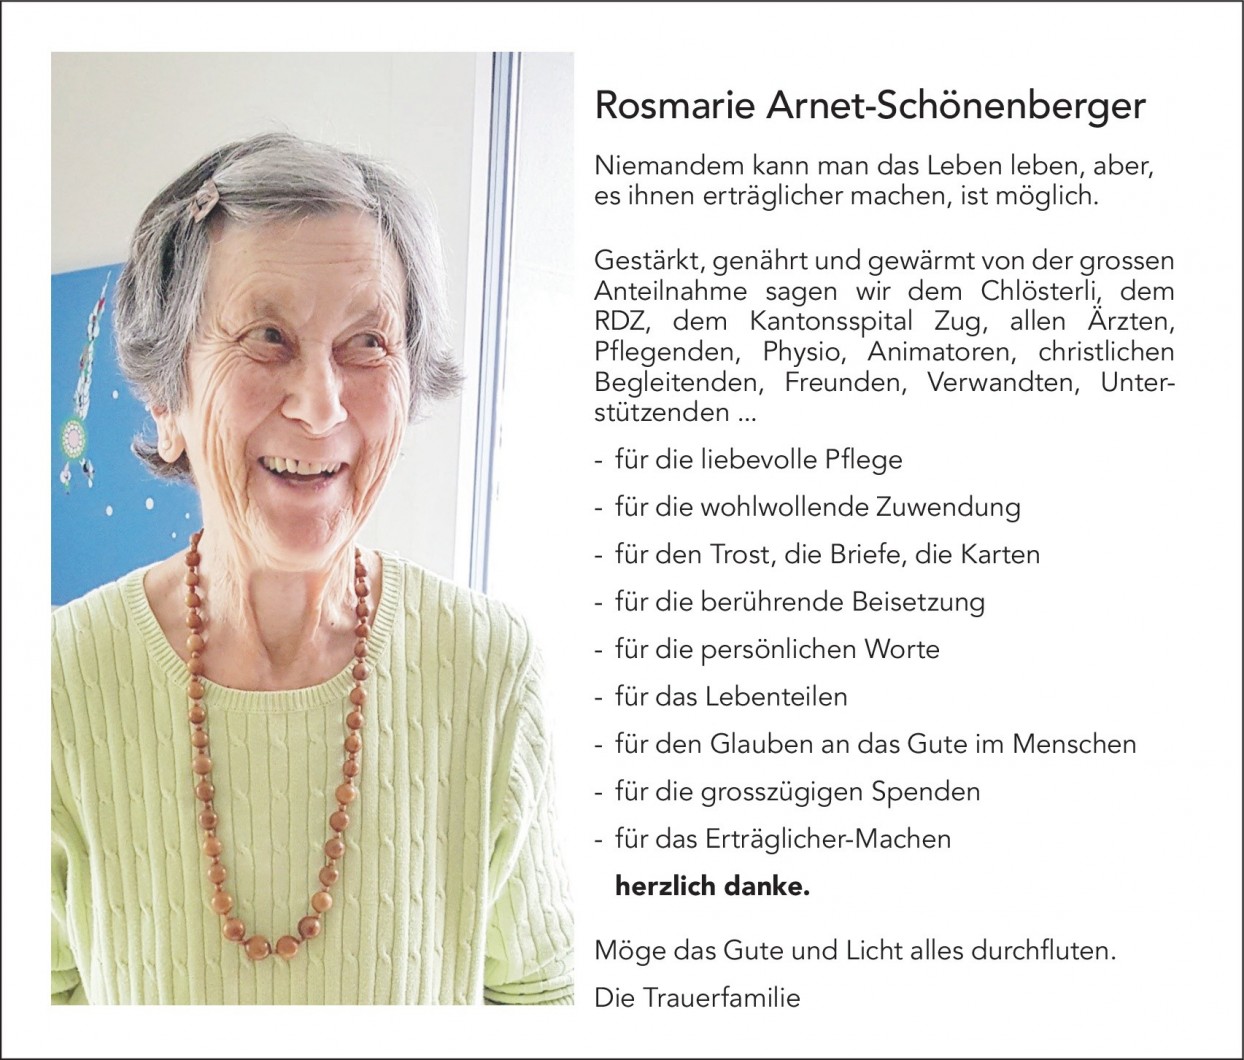 Rosmarie Arnet-Schönenberger